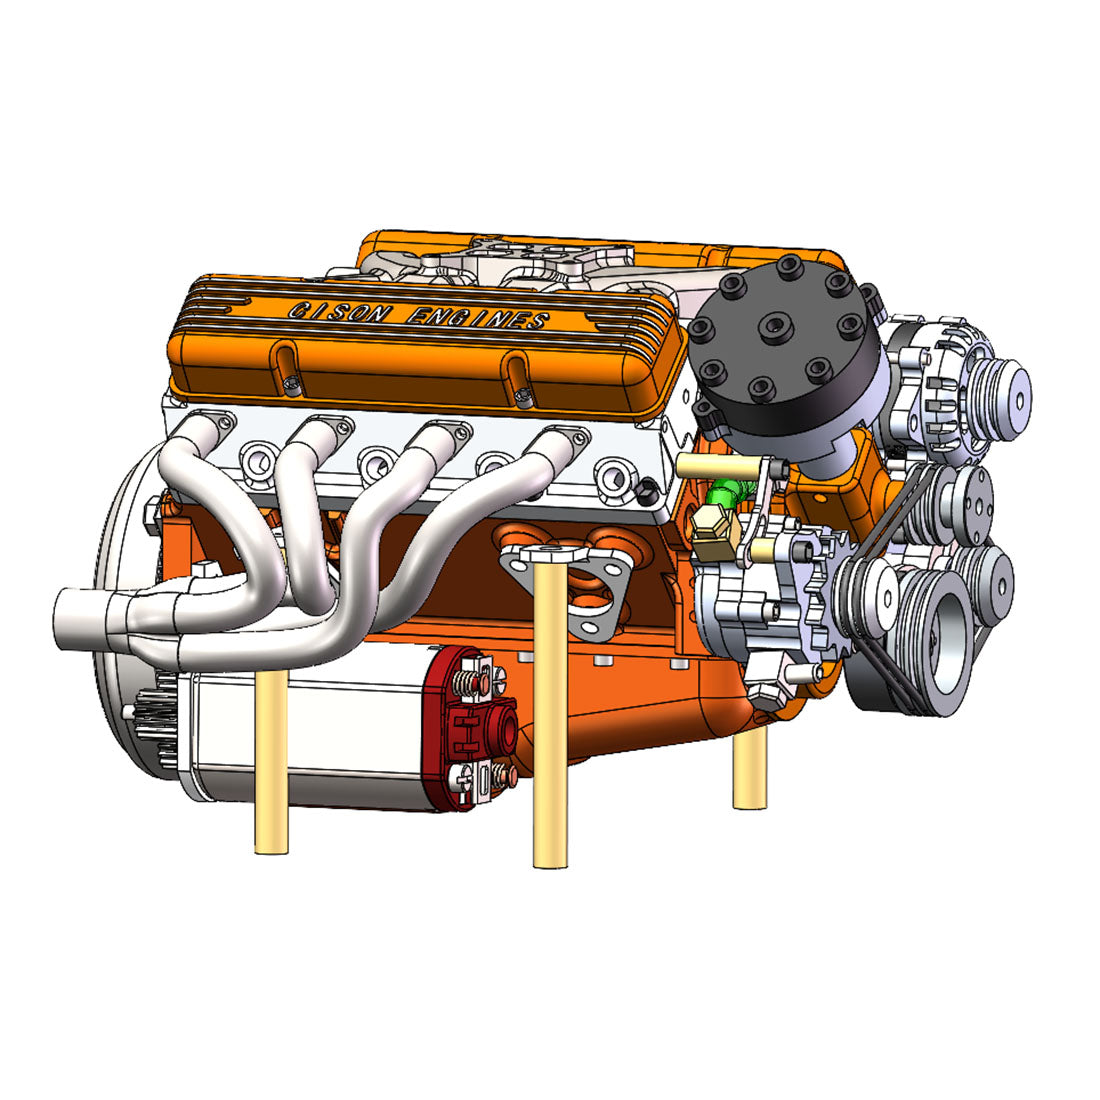 Cison V8 Engine Kits V8-440 with Metal Base Full Set 44cc - stirlingkit